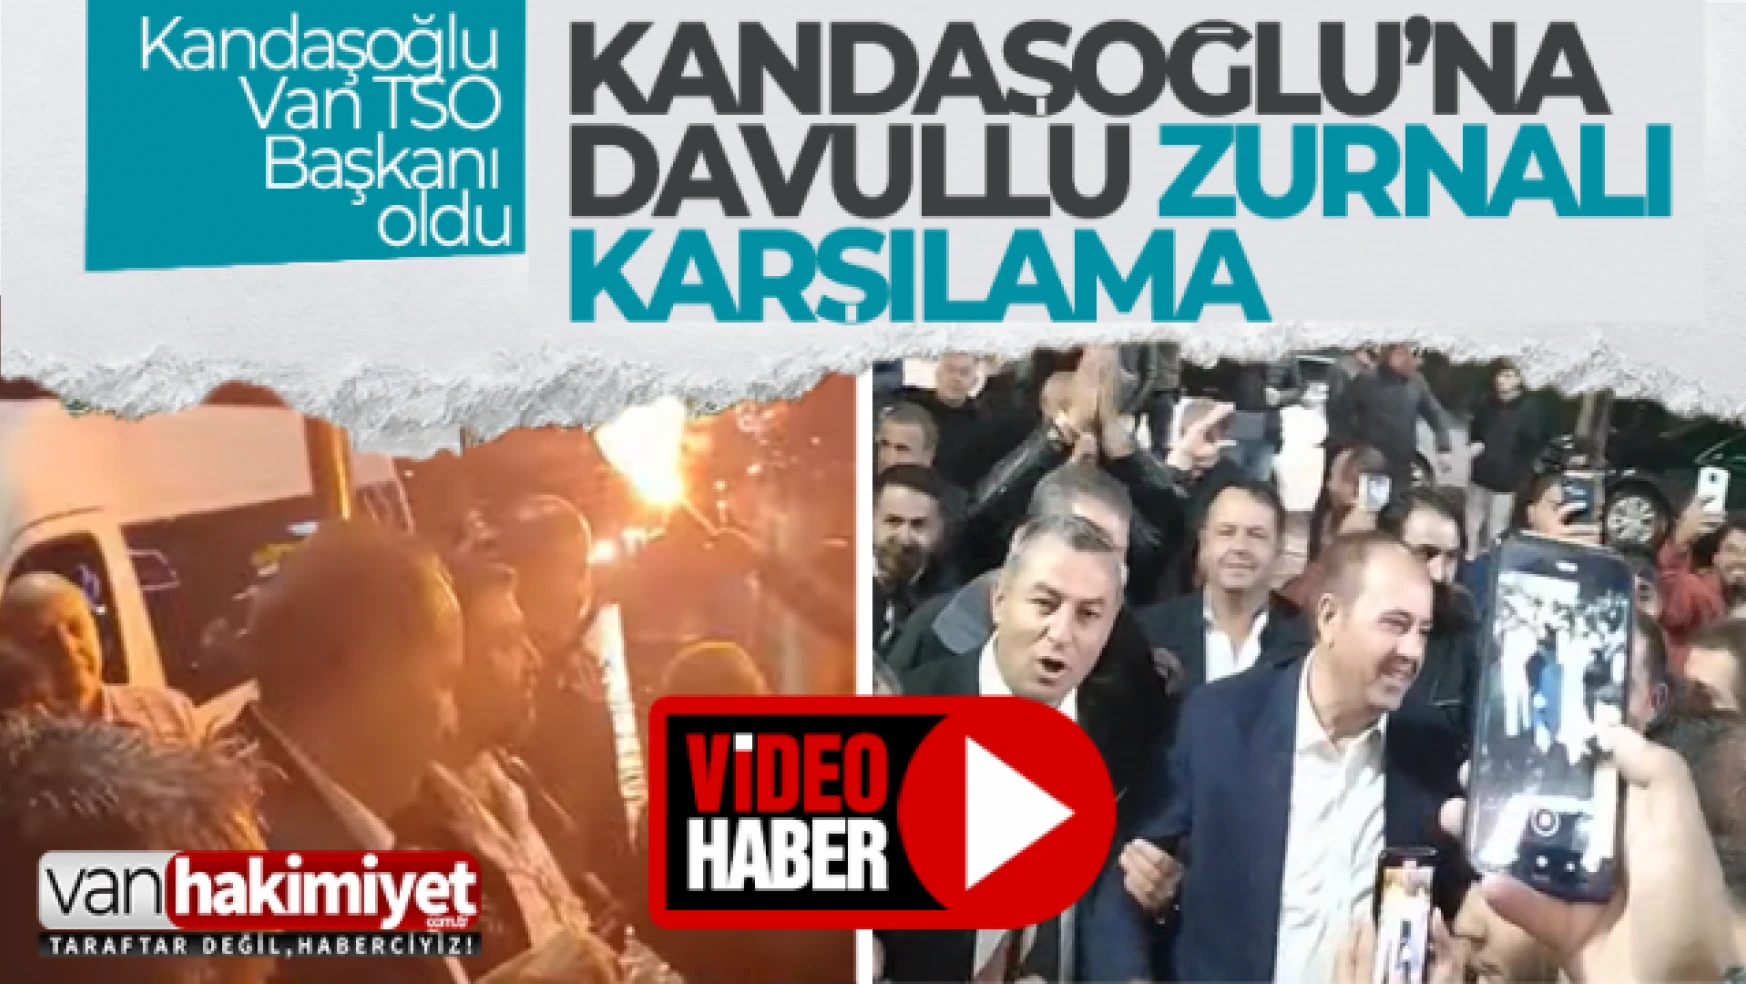 Van TSO Başkanı Kandaşoğlu'na coşkulu karşılama